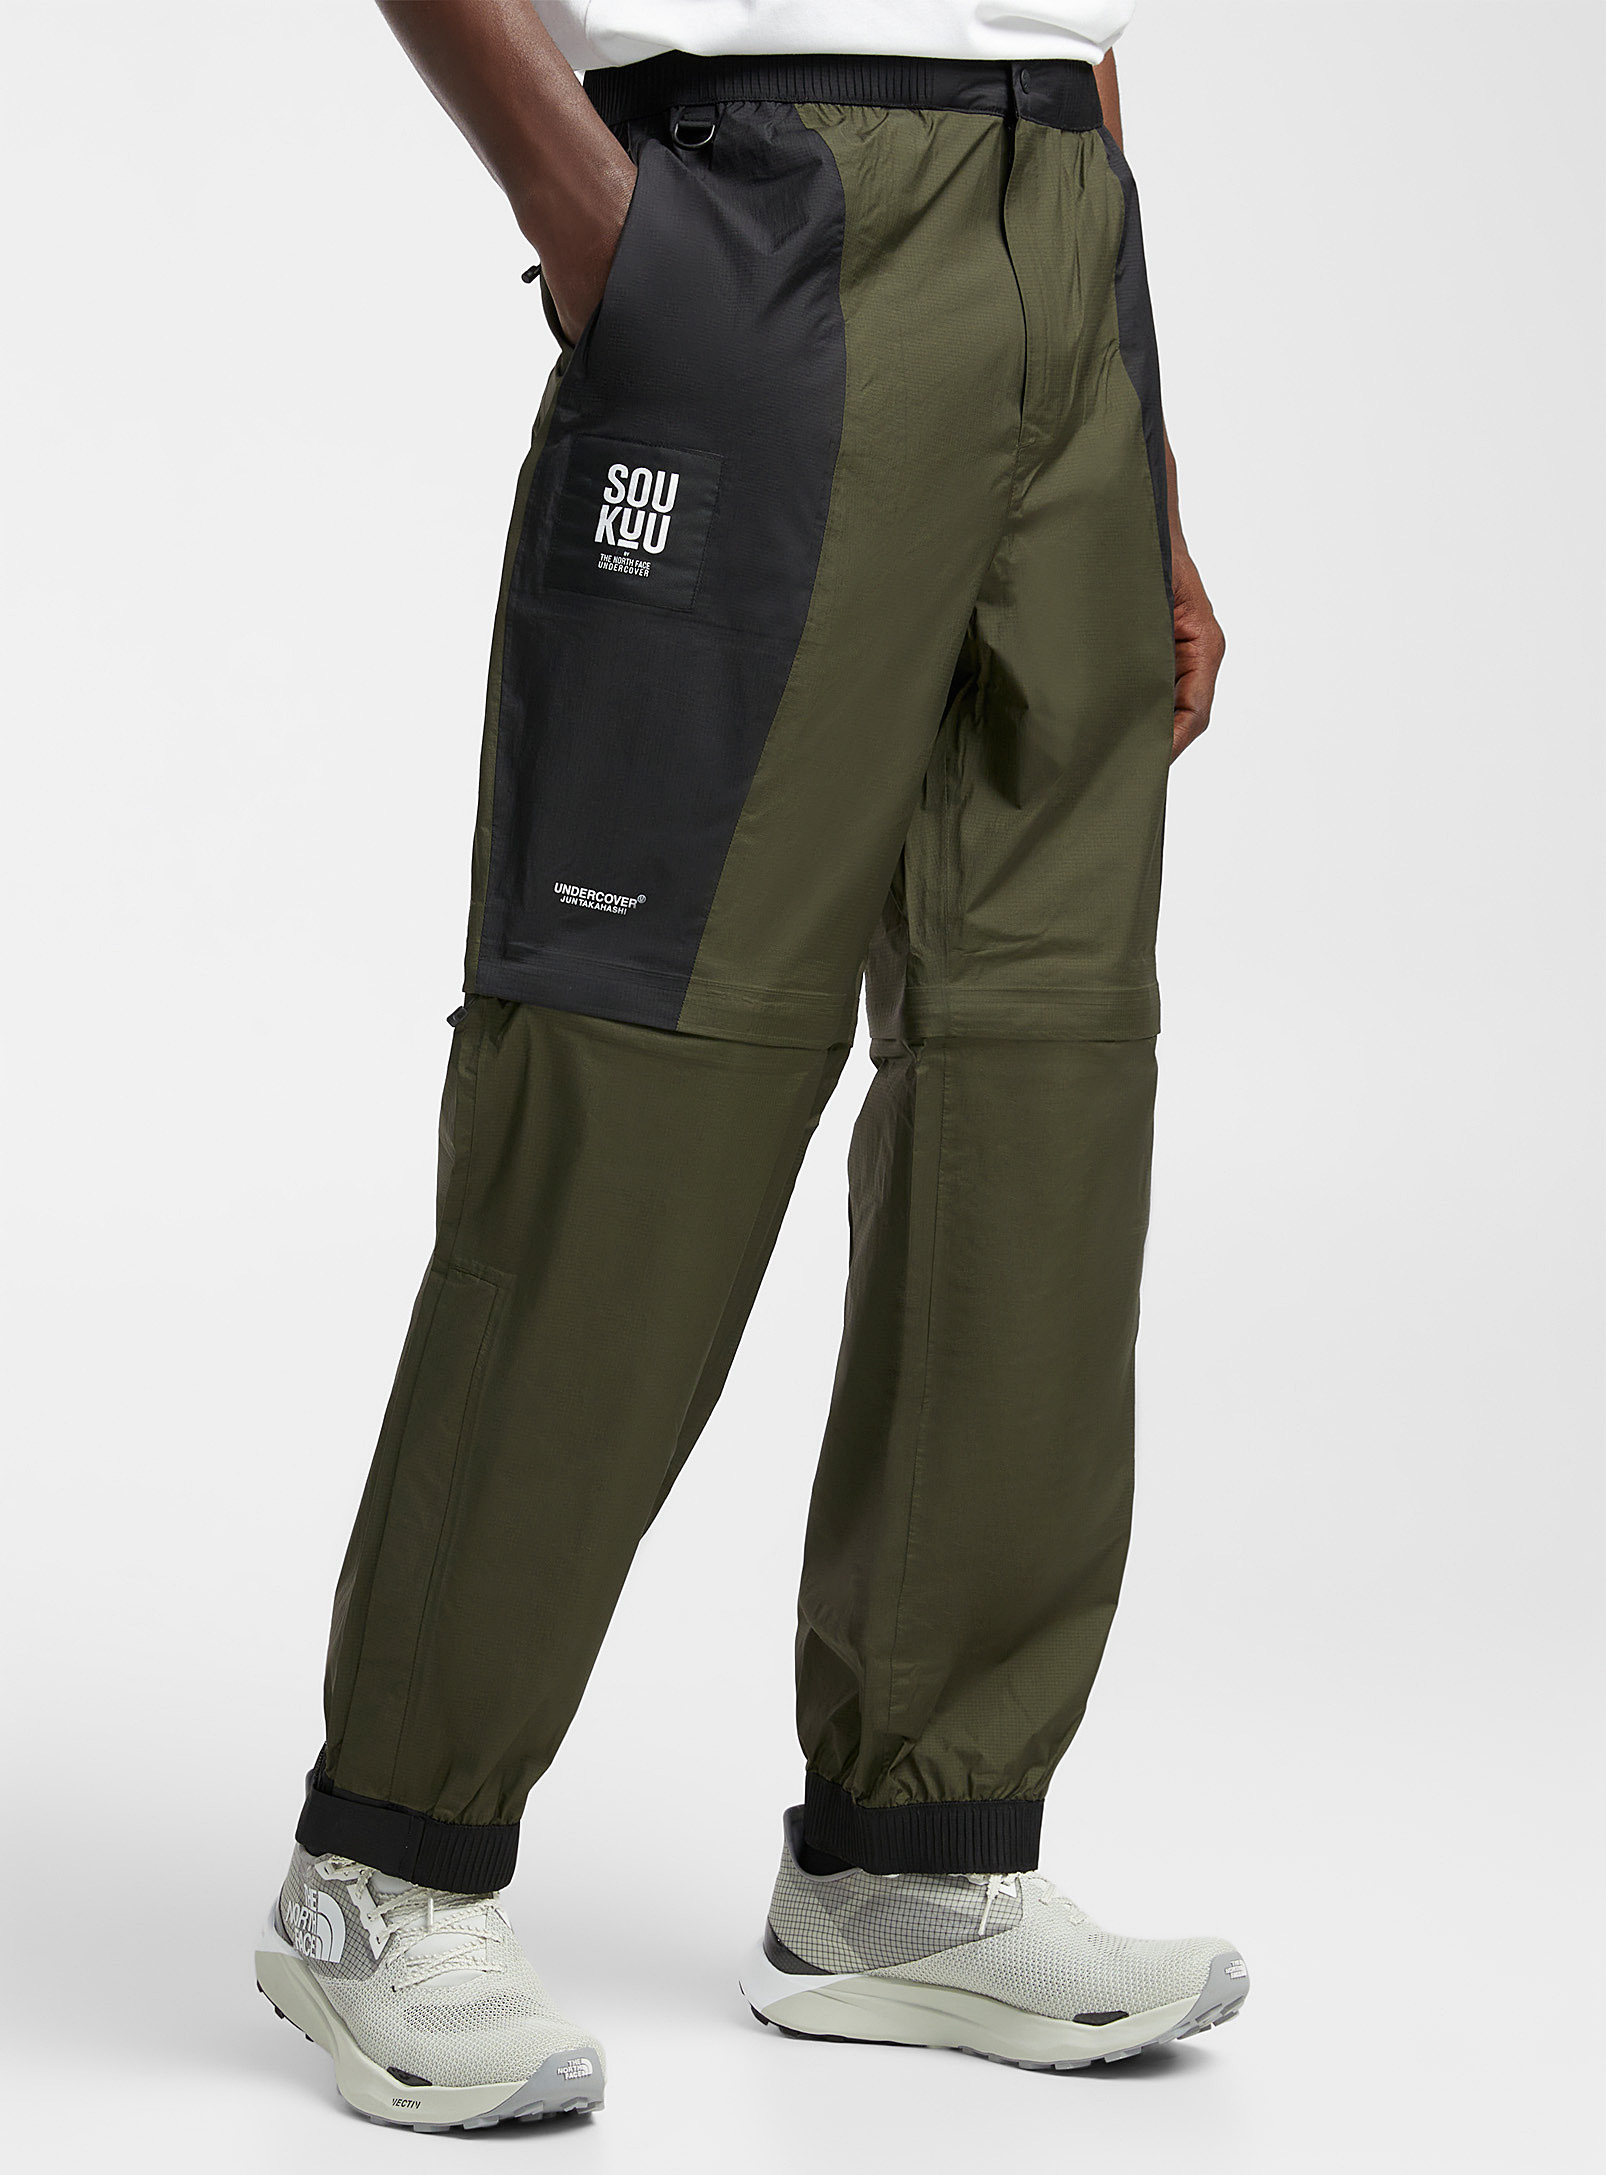 The North Face x Undercover - Le pantalon convertible bicolore Soukuu Hike